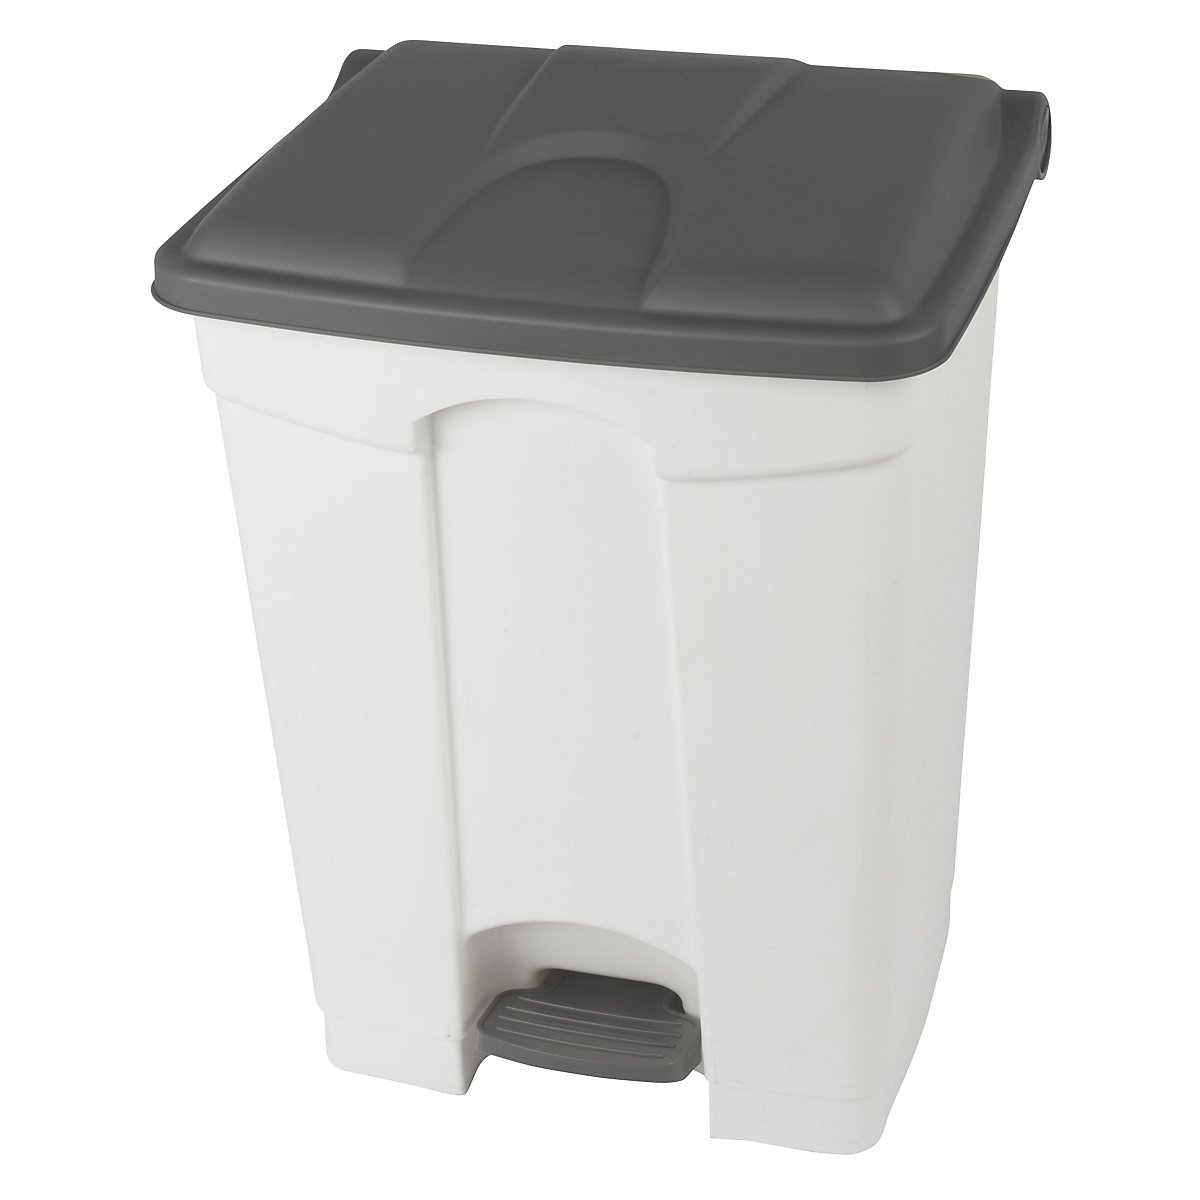 EUROKRAFTbasic – Pedal waste collector, capacity 70 l, WxHxD 505 x 675 x 415 mm, white, grey lid